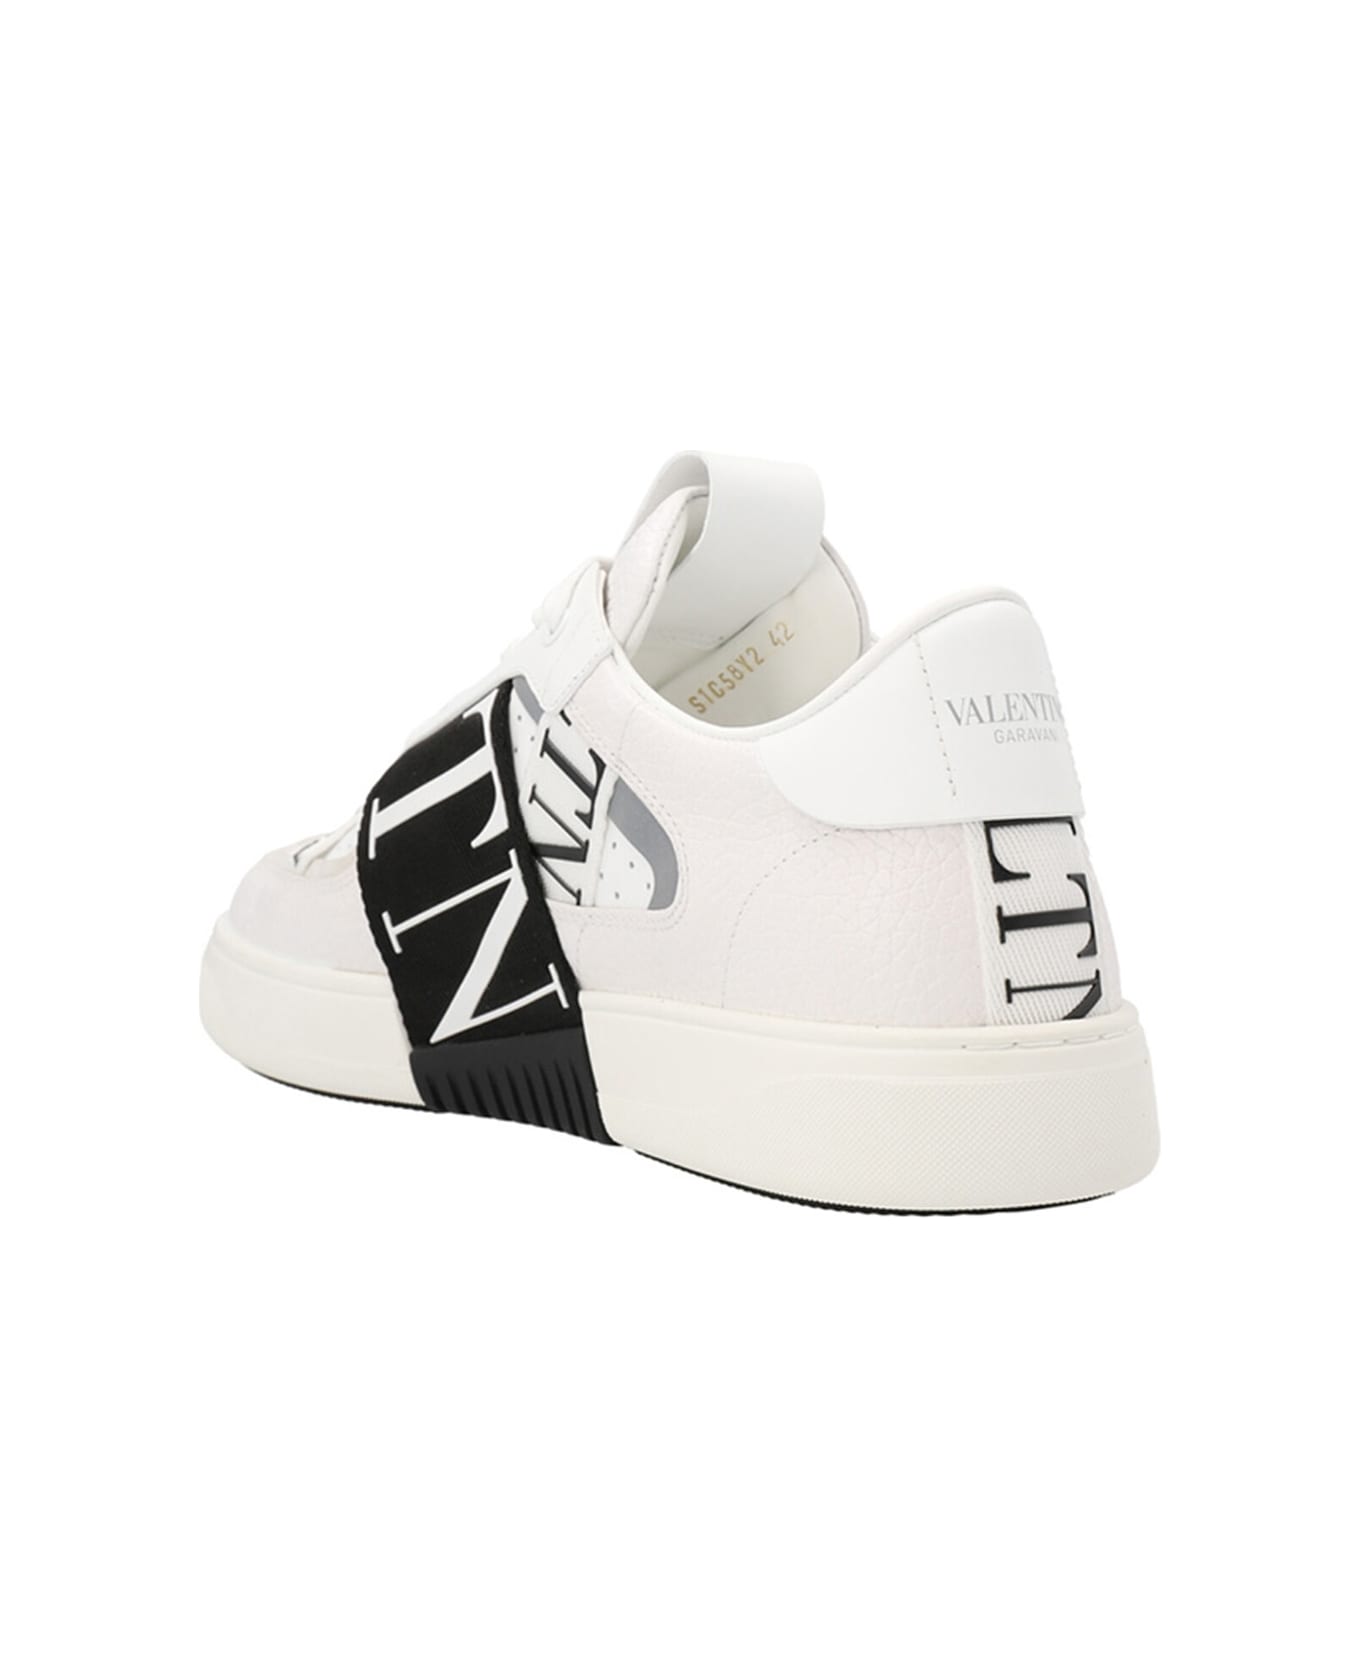 Valentino Garavani Vltn Sneakers - White/Black